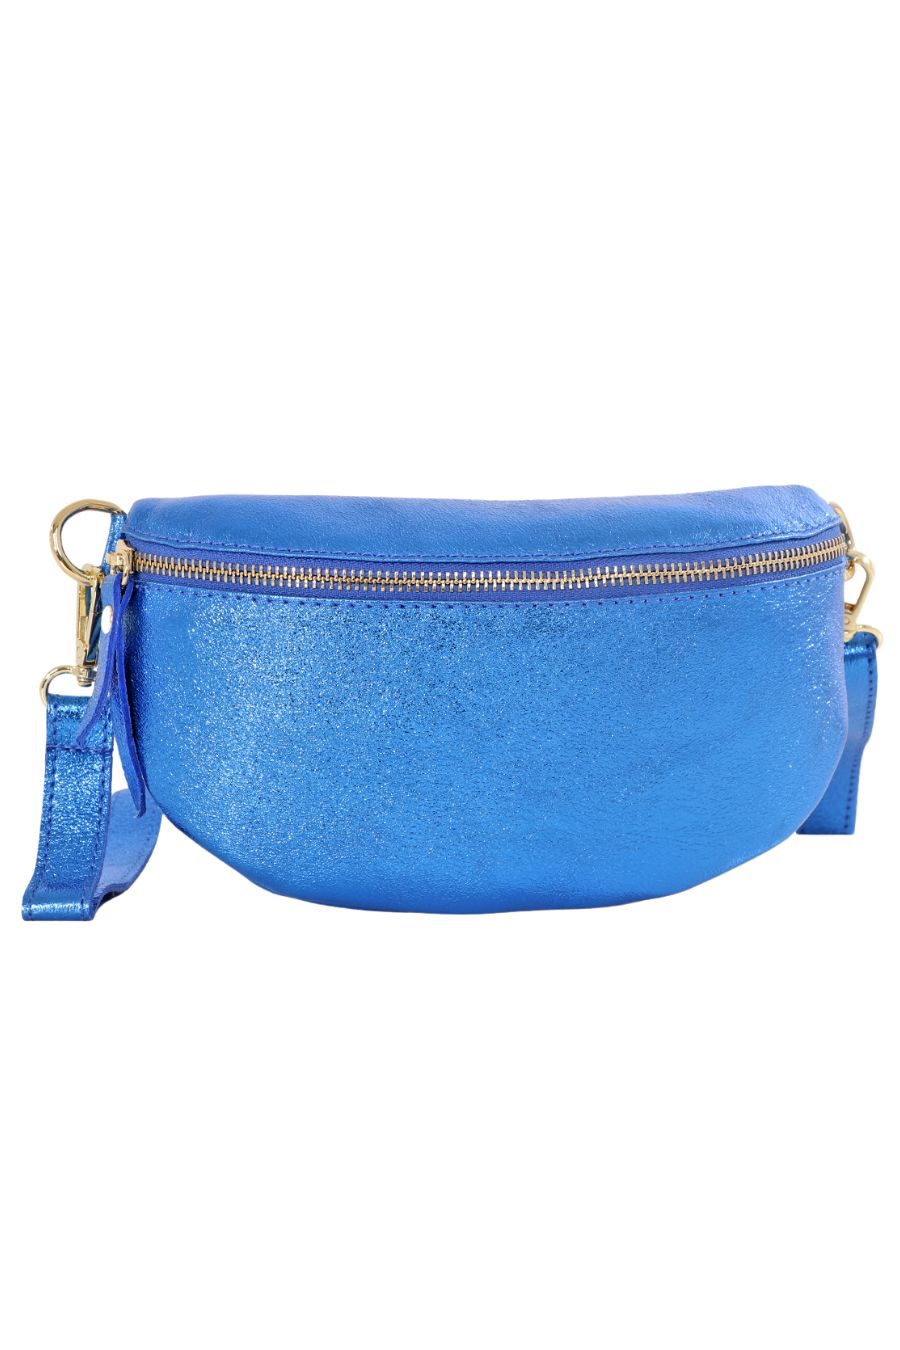 Metallic Royal Blue Italian Leather Half Moon Crossbody Bag